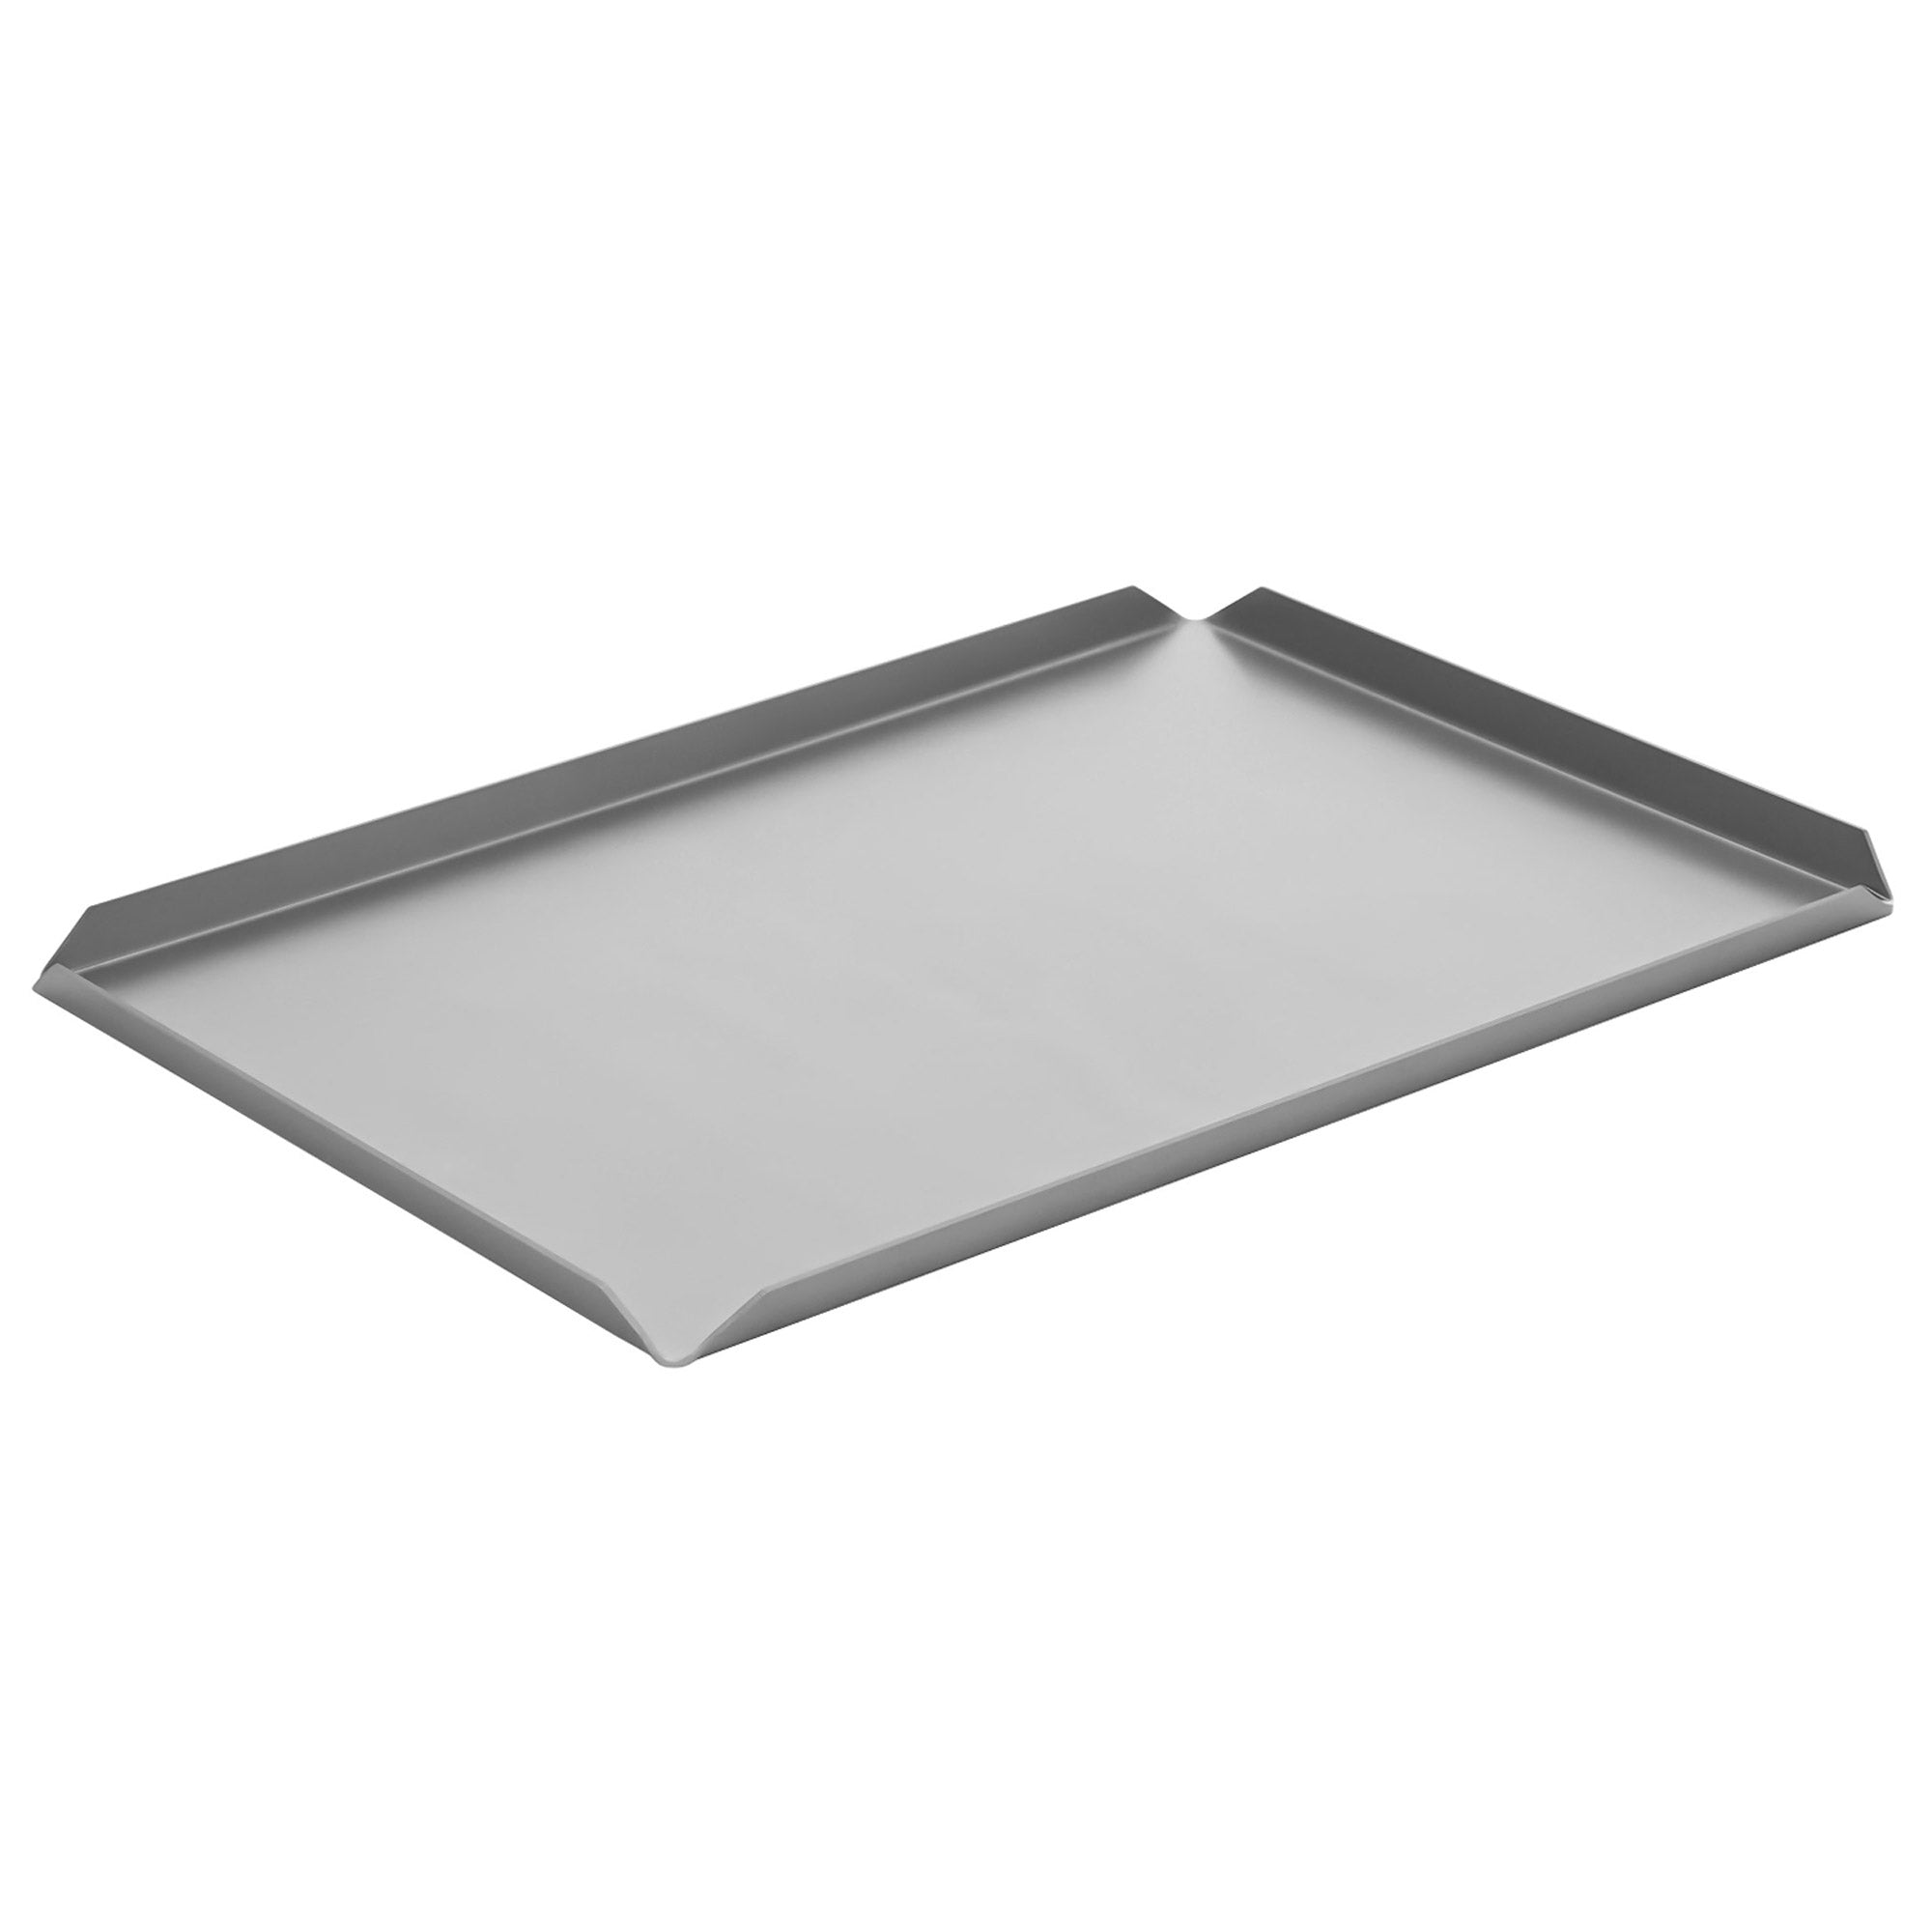 (5 броя) Алуминиева табела за сладкарски изделия и презентации - 400 x 150 x 10 mm - алуминий